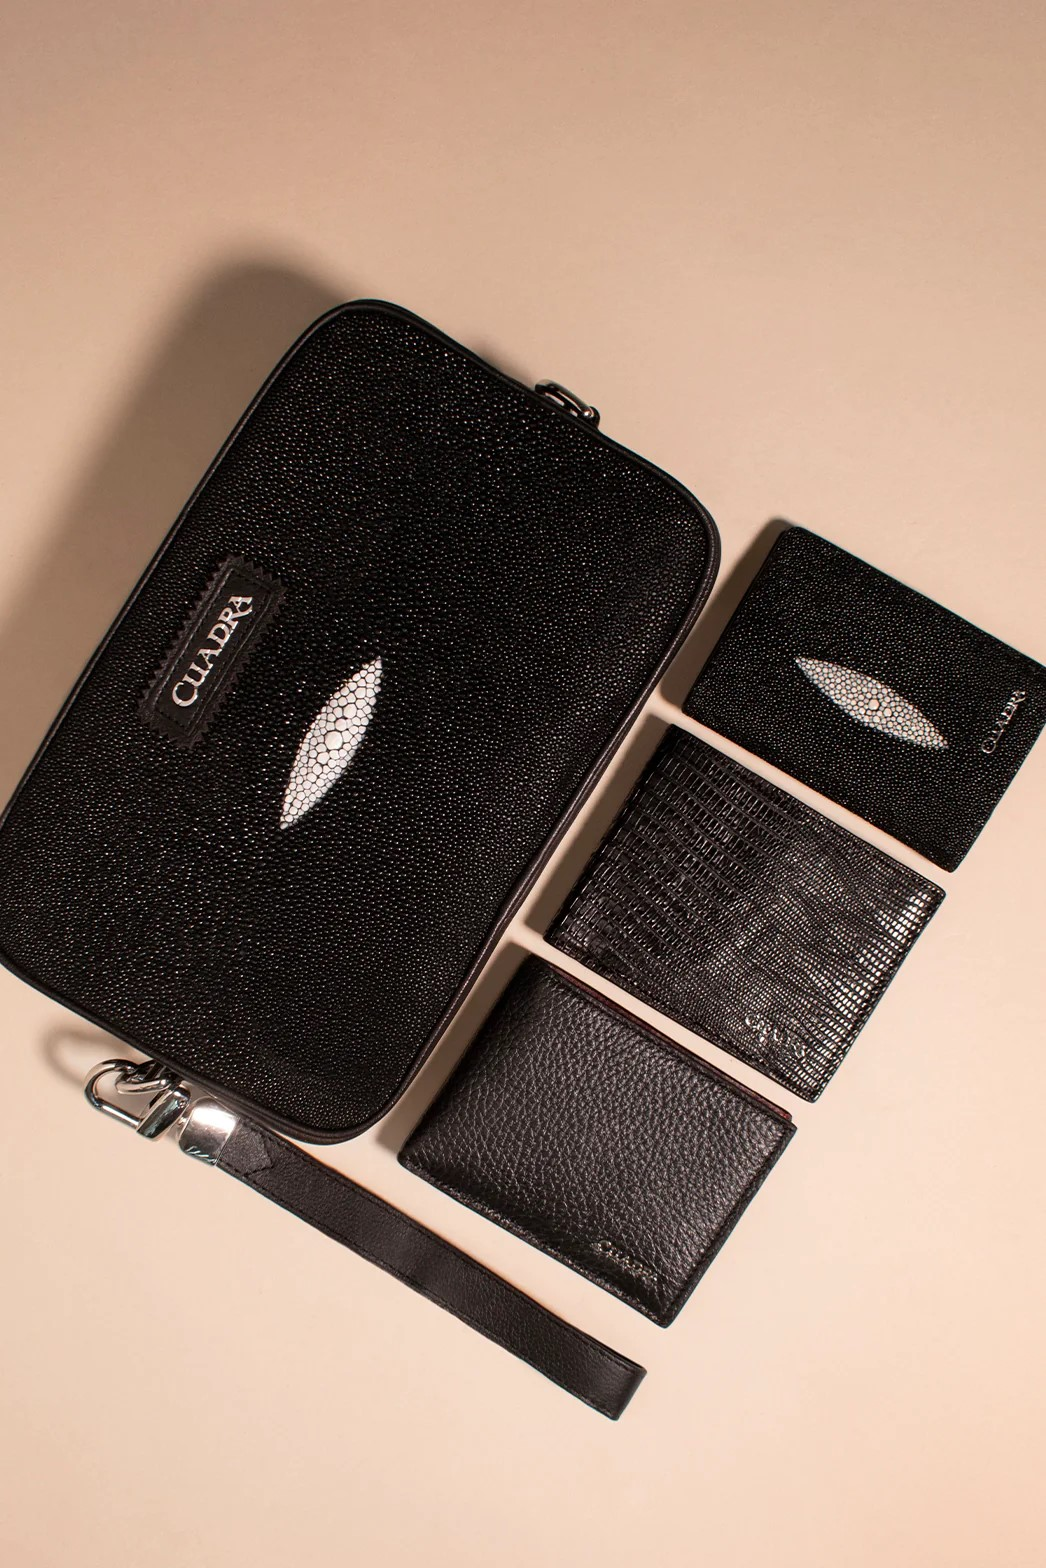 Cuadra Bags & Accessories for Men - Belts, wallets